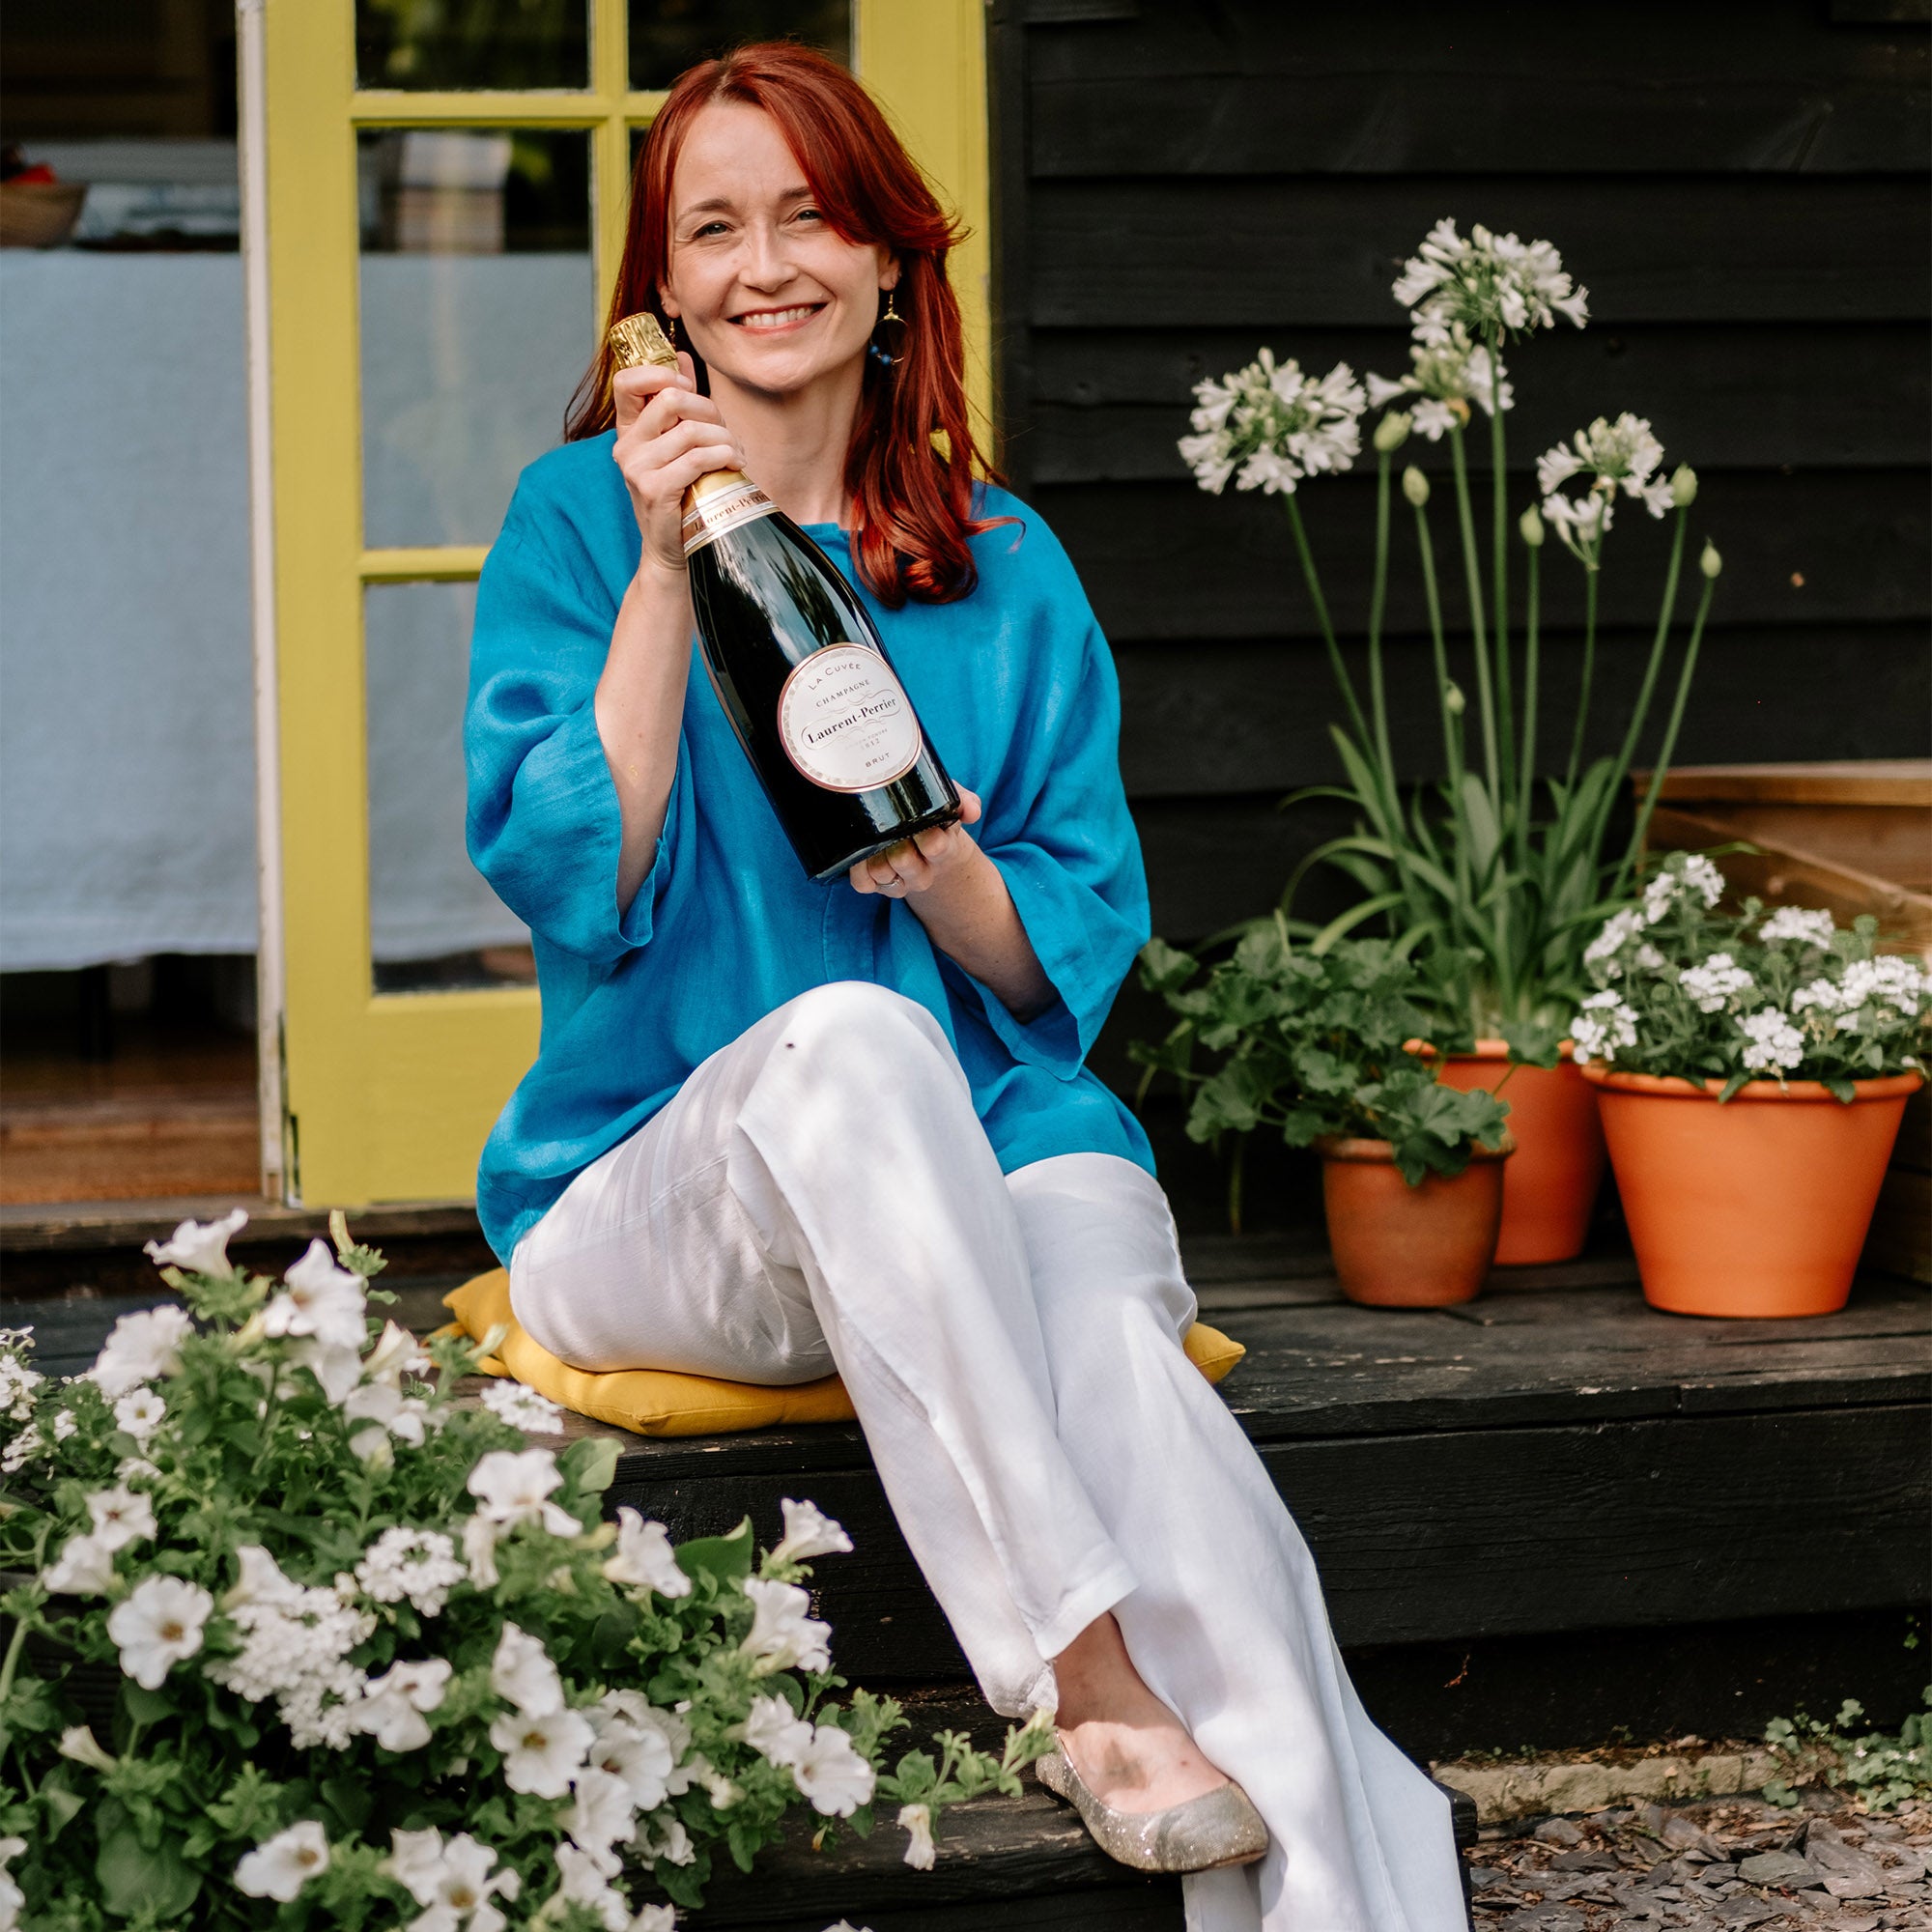 Dorset bookbinder Susan Green celebrates 15 years in business outside her creative studio